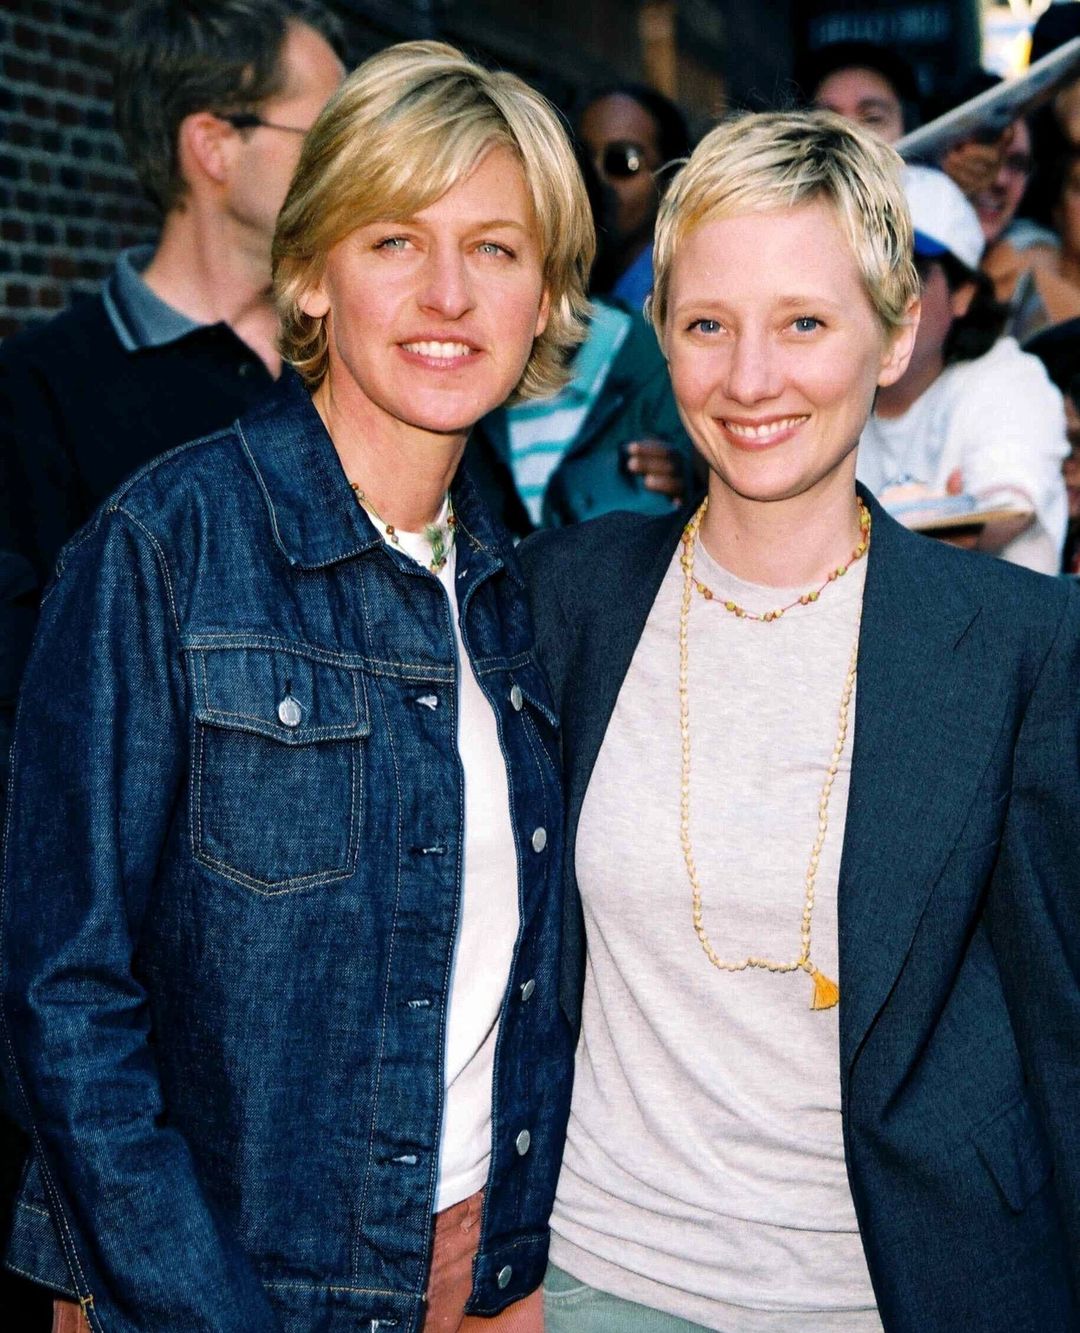 Ellen DeGeneres and Anne Heche attend a public event